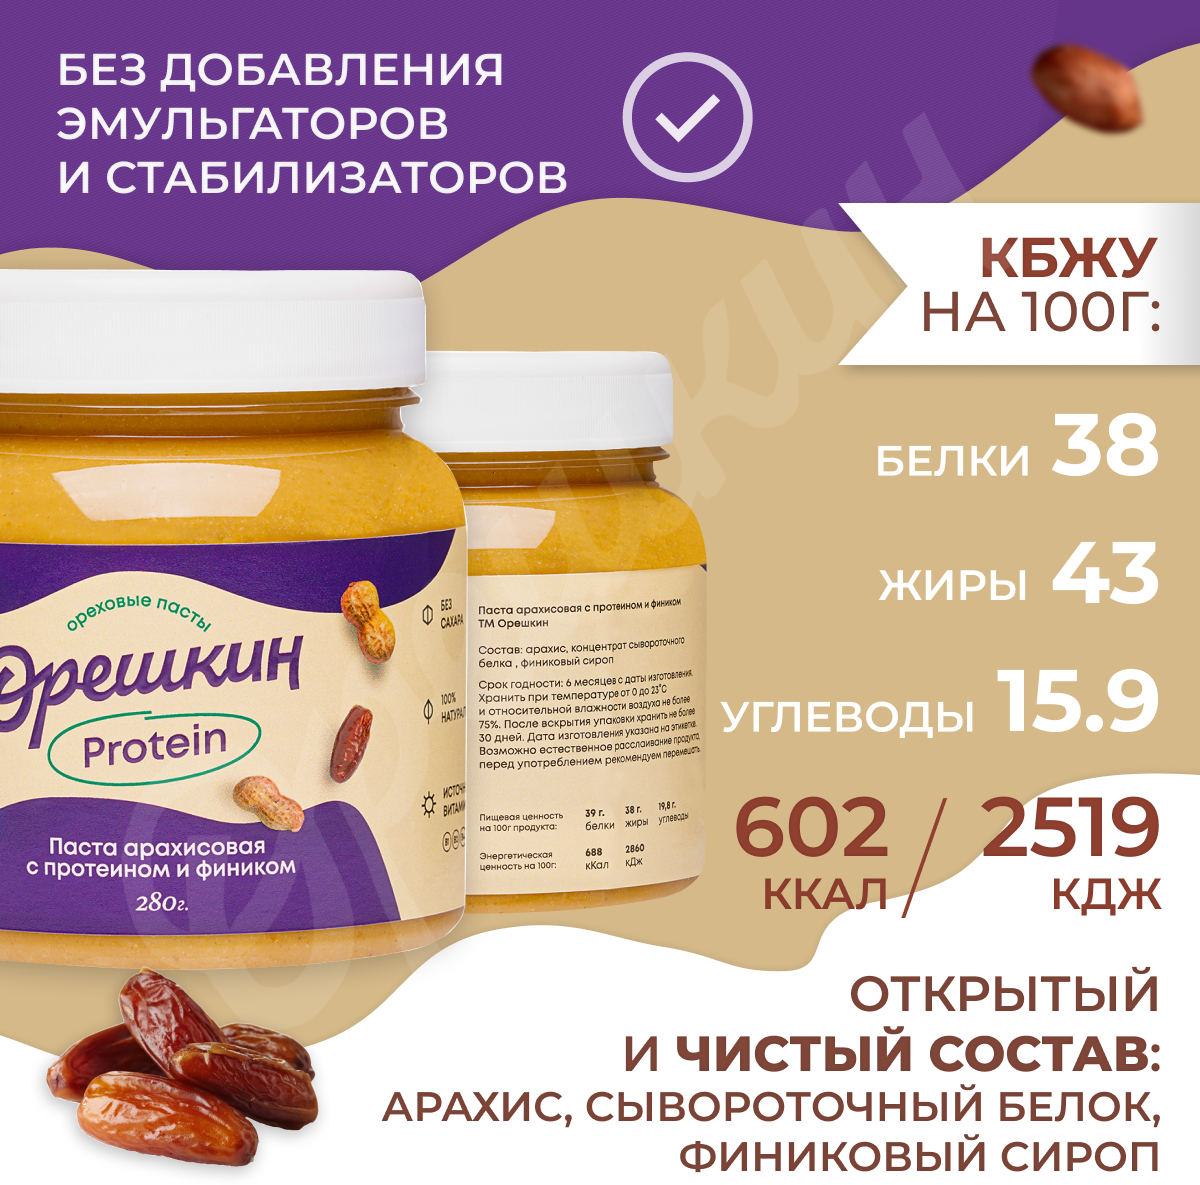 Паста арахисовая "Орешкин" Protein с протеином и фиником 280 гр - фотография № 2